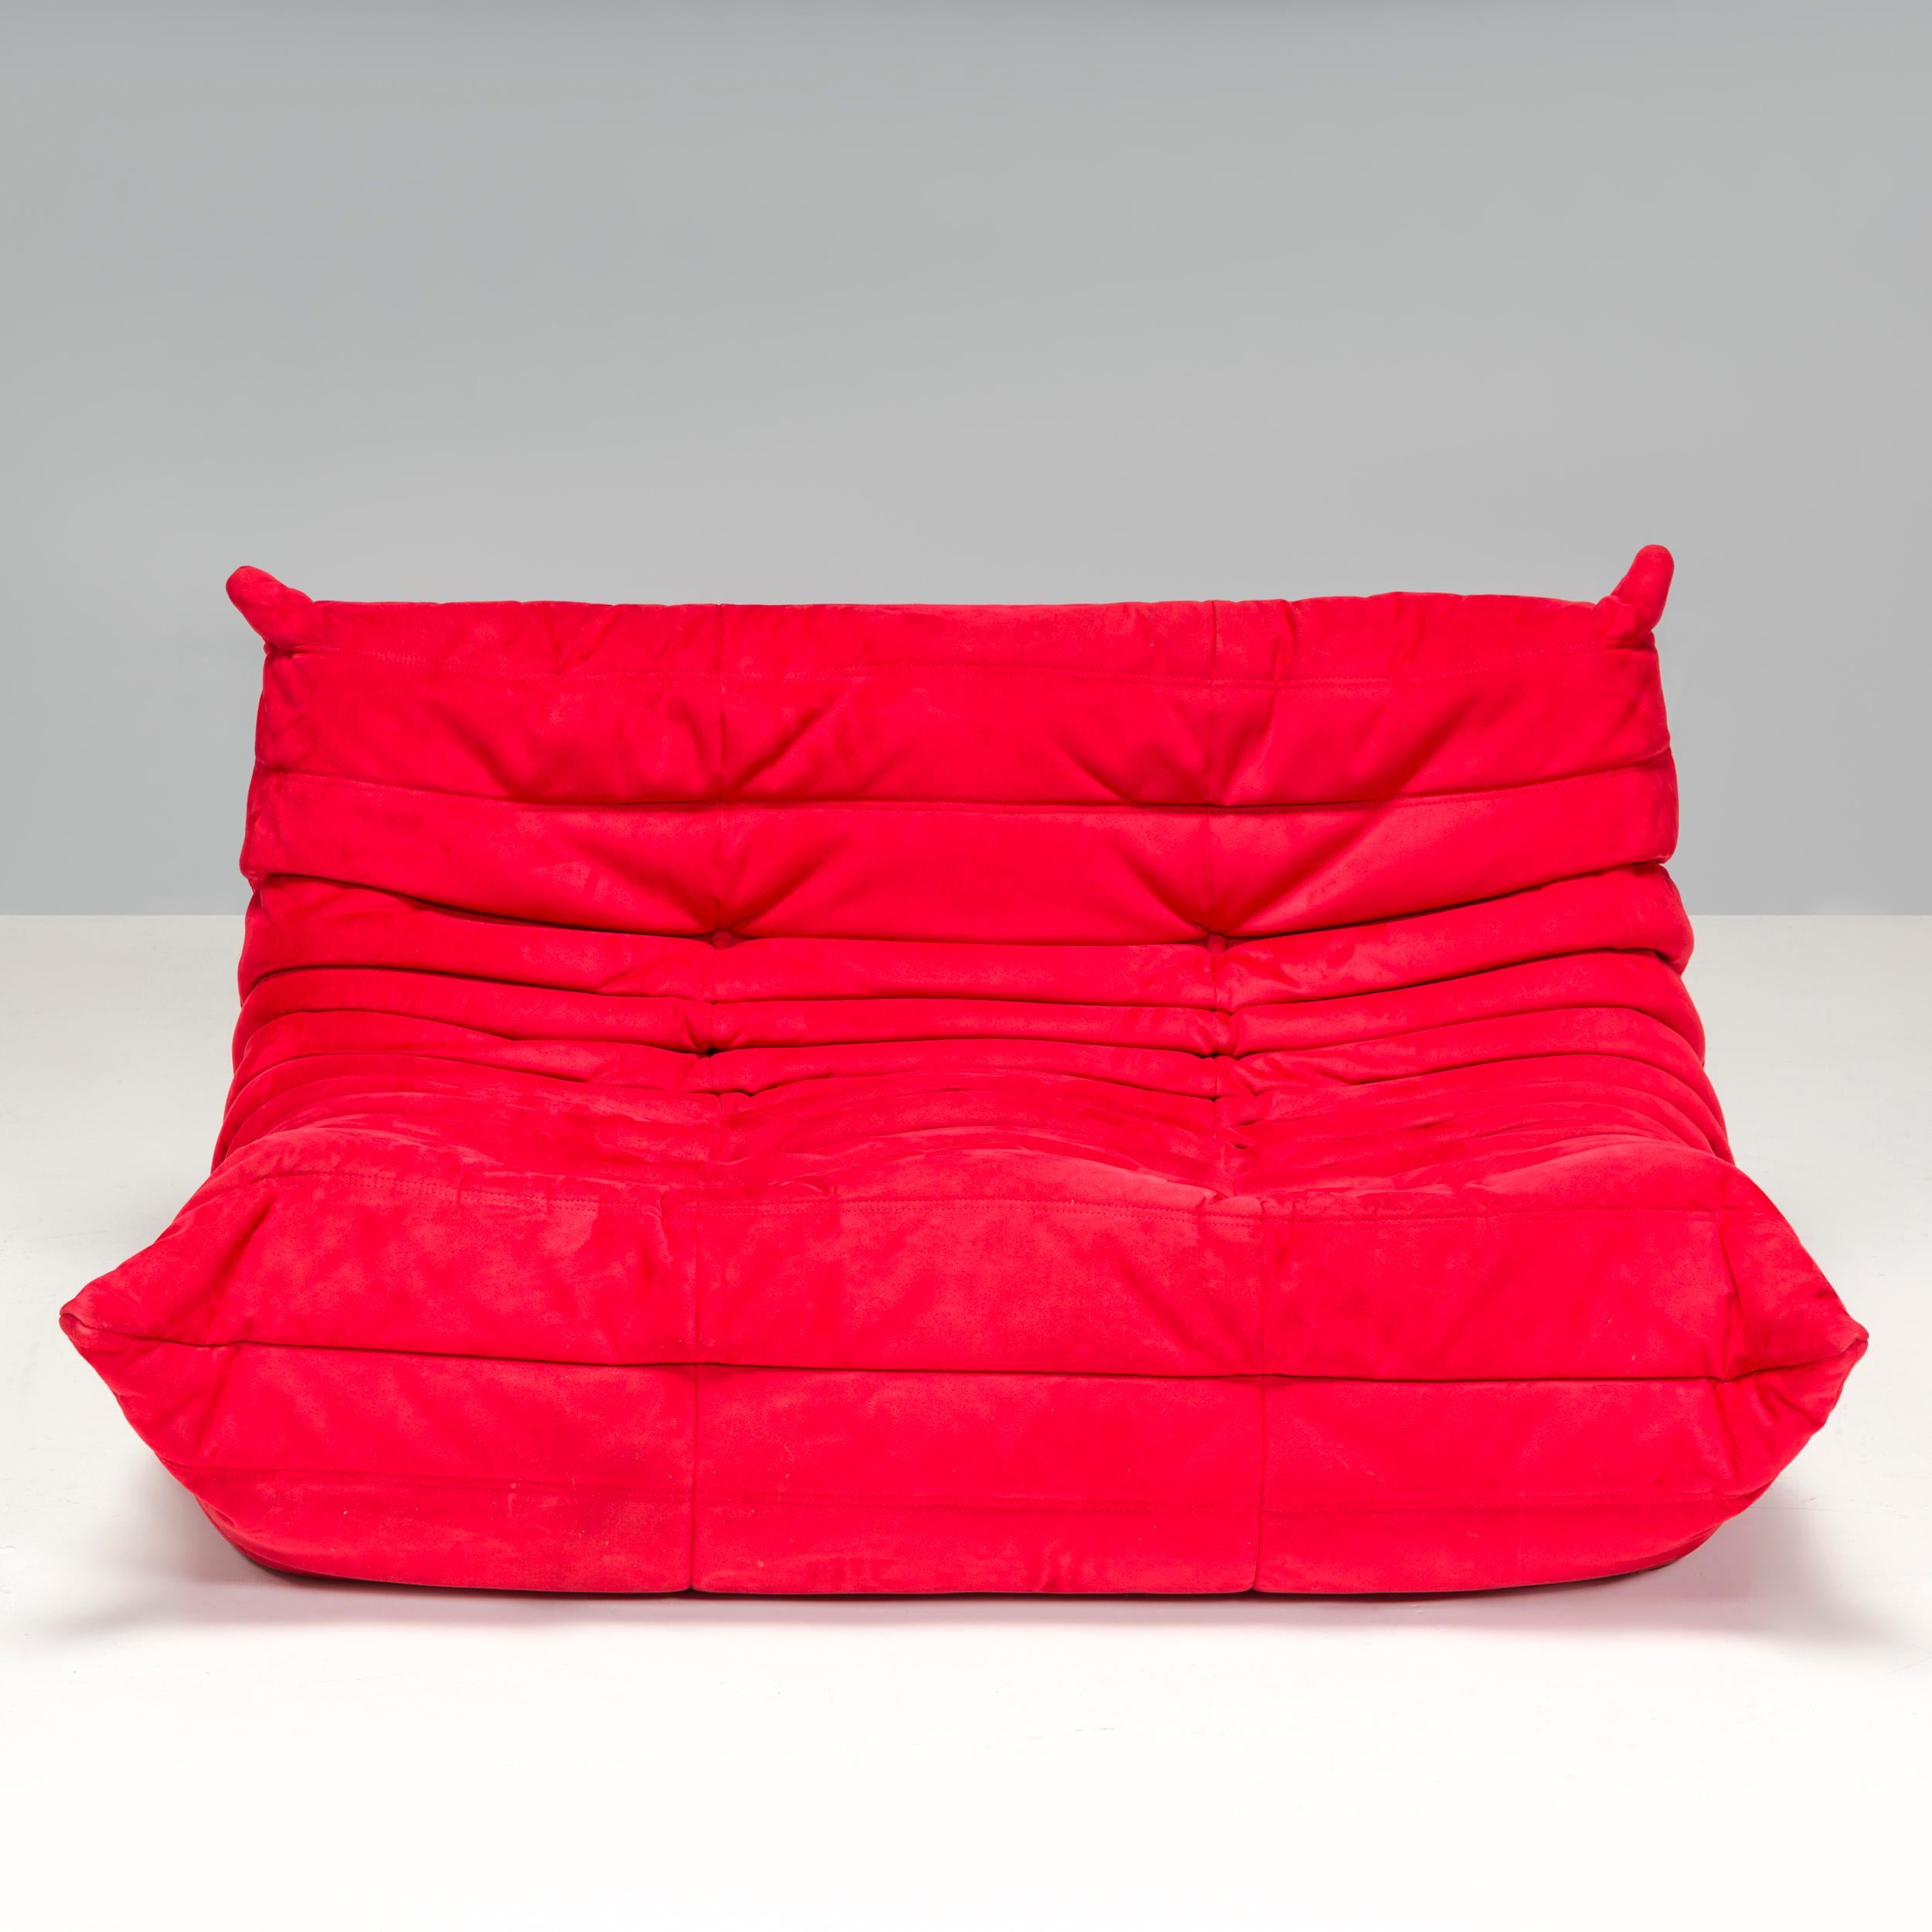 Ligne Roset by Michel Ducaroy Togo Red Alcantara Sectional Sofa, Set of 3 For Sale 7